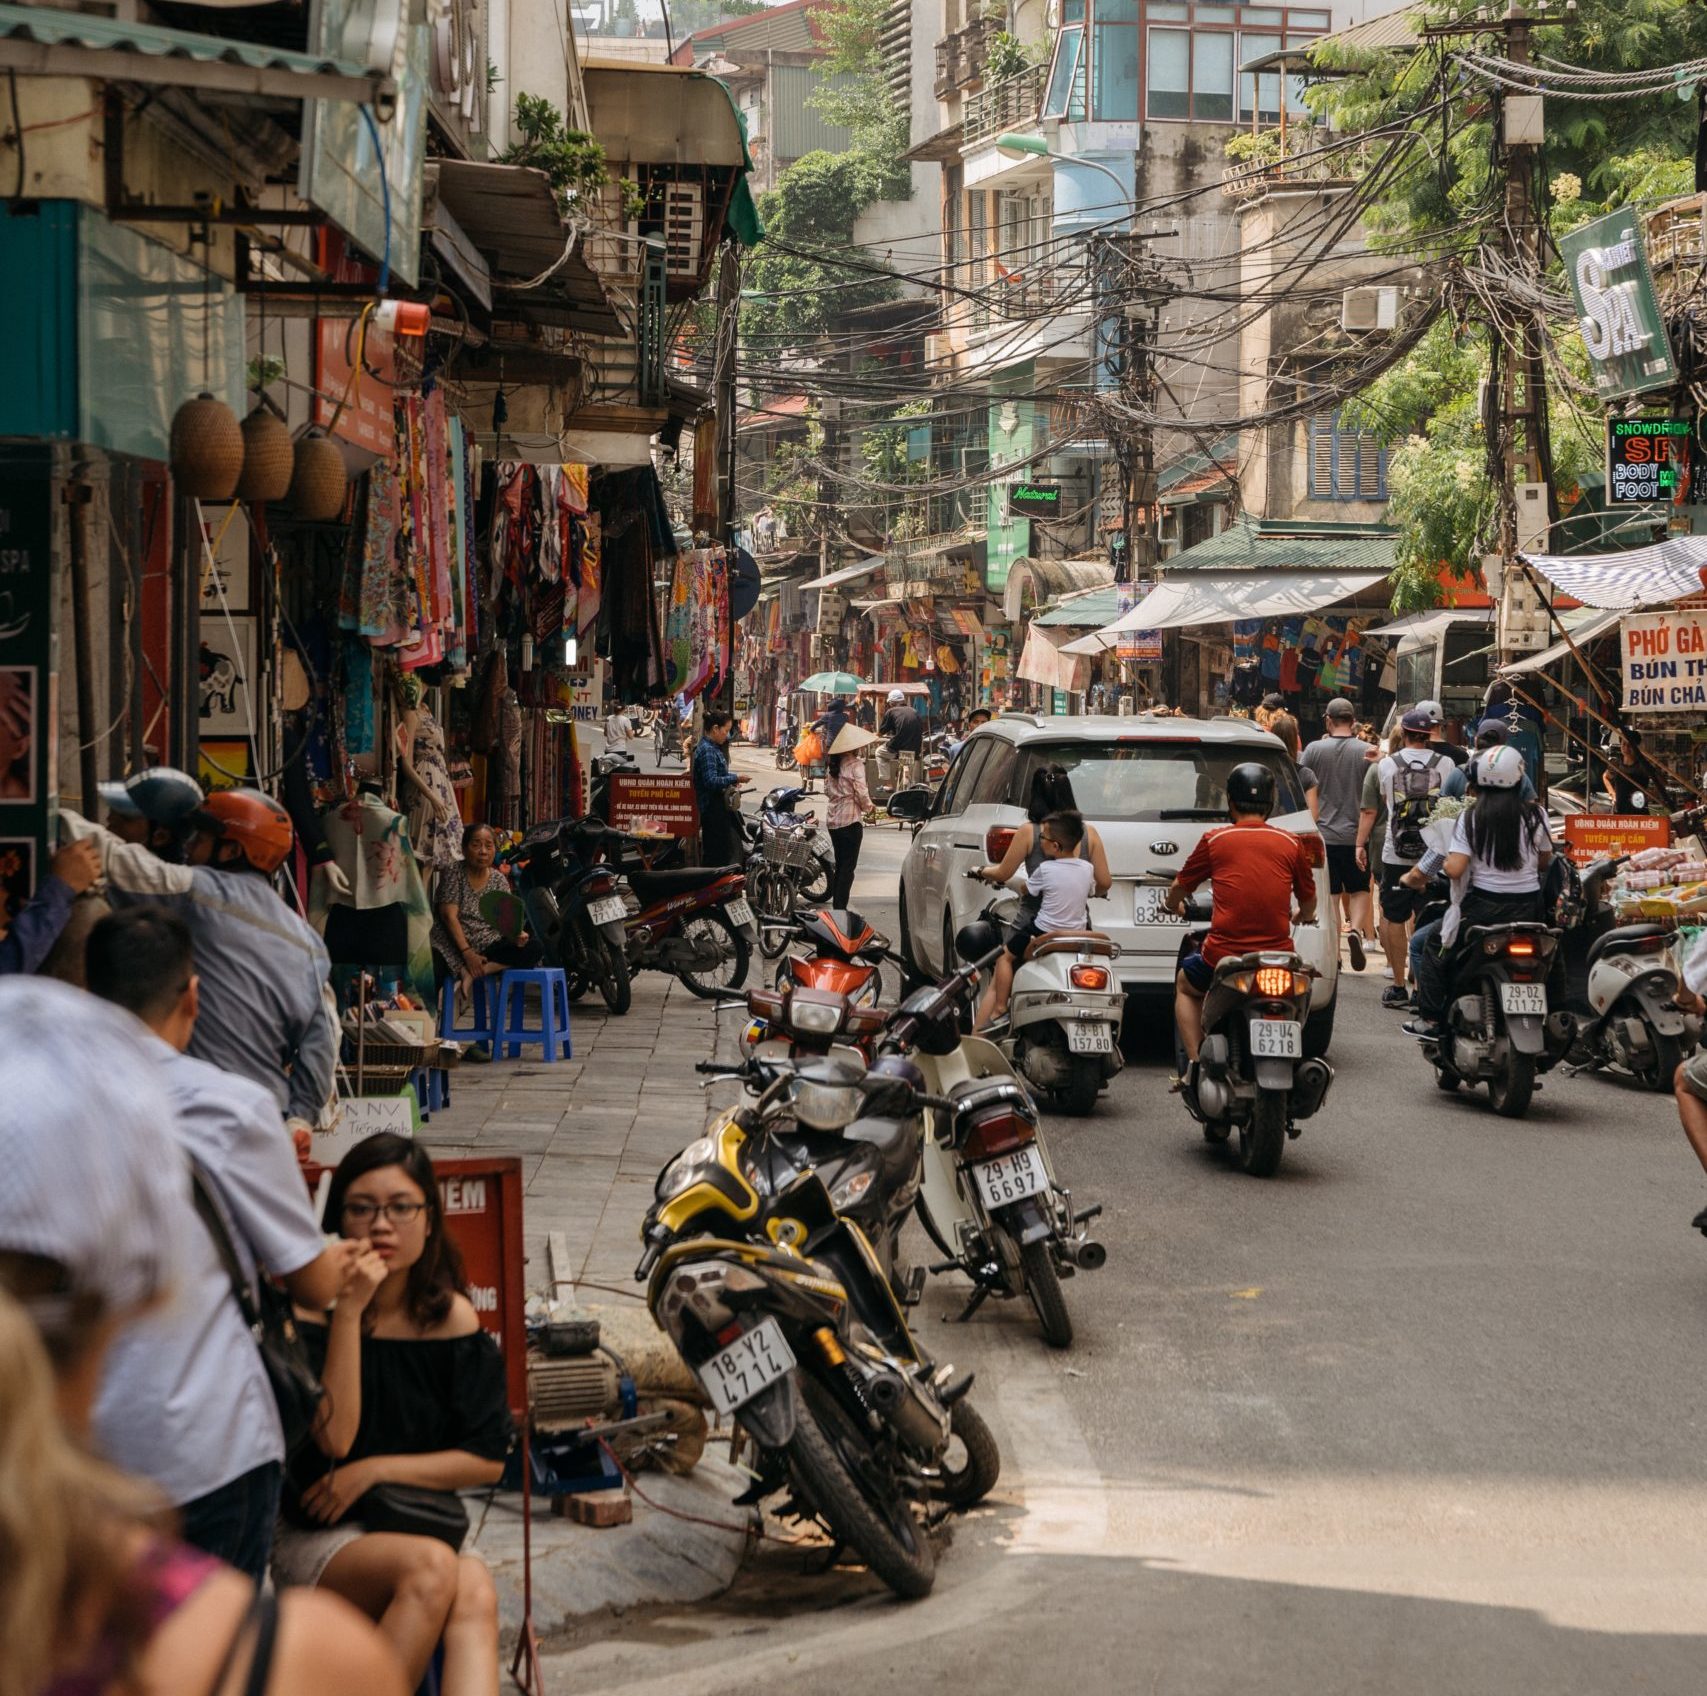 city street in Vietnam with motorbikes, restaurants, and housing